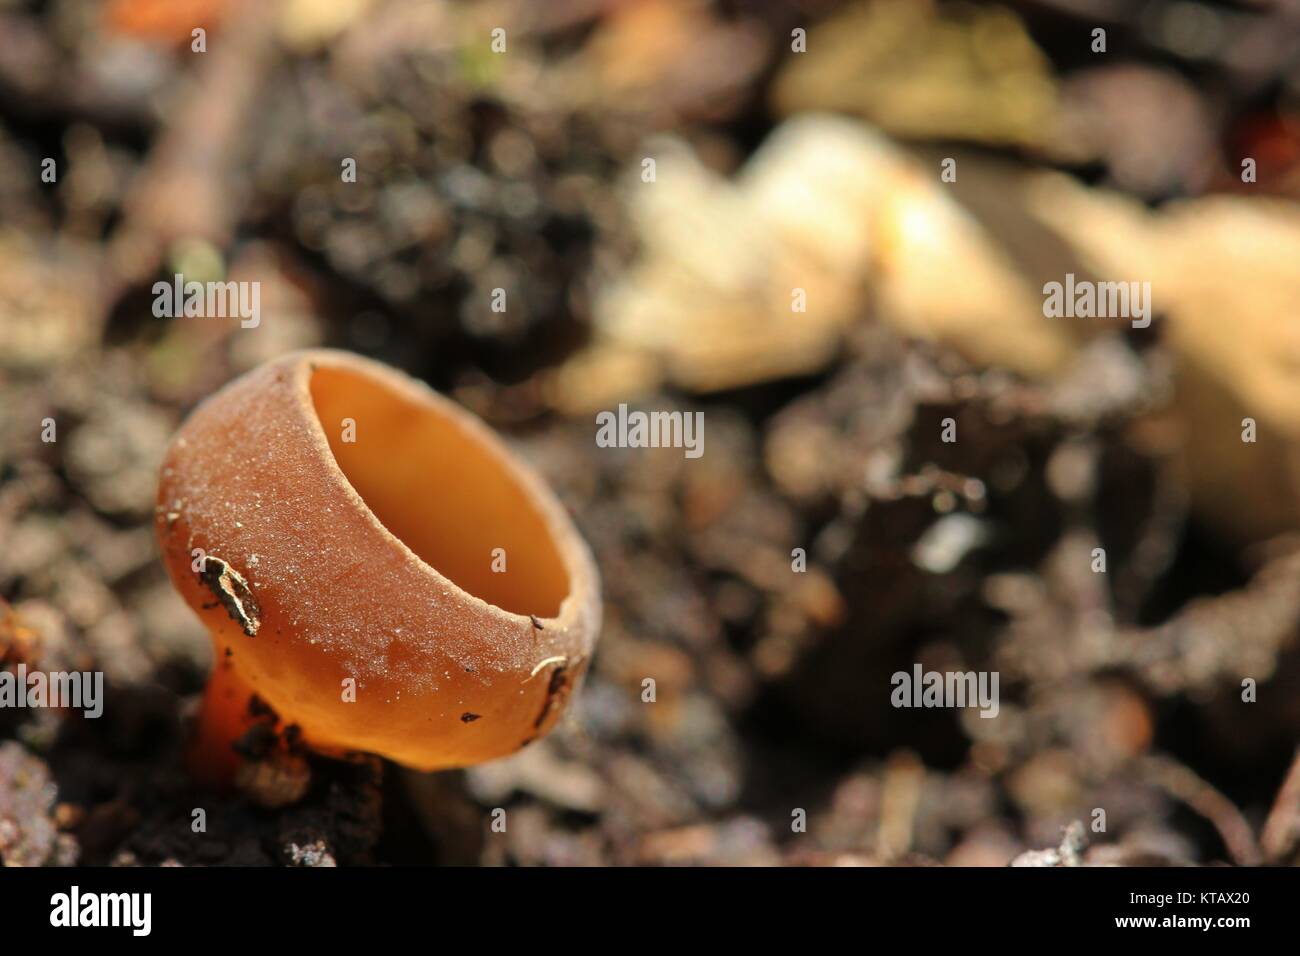 common anemone beaker (dumontinia tuberosa) Stock Photo